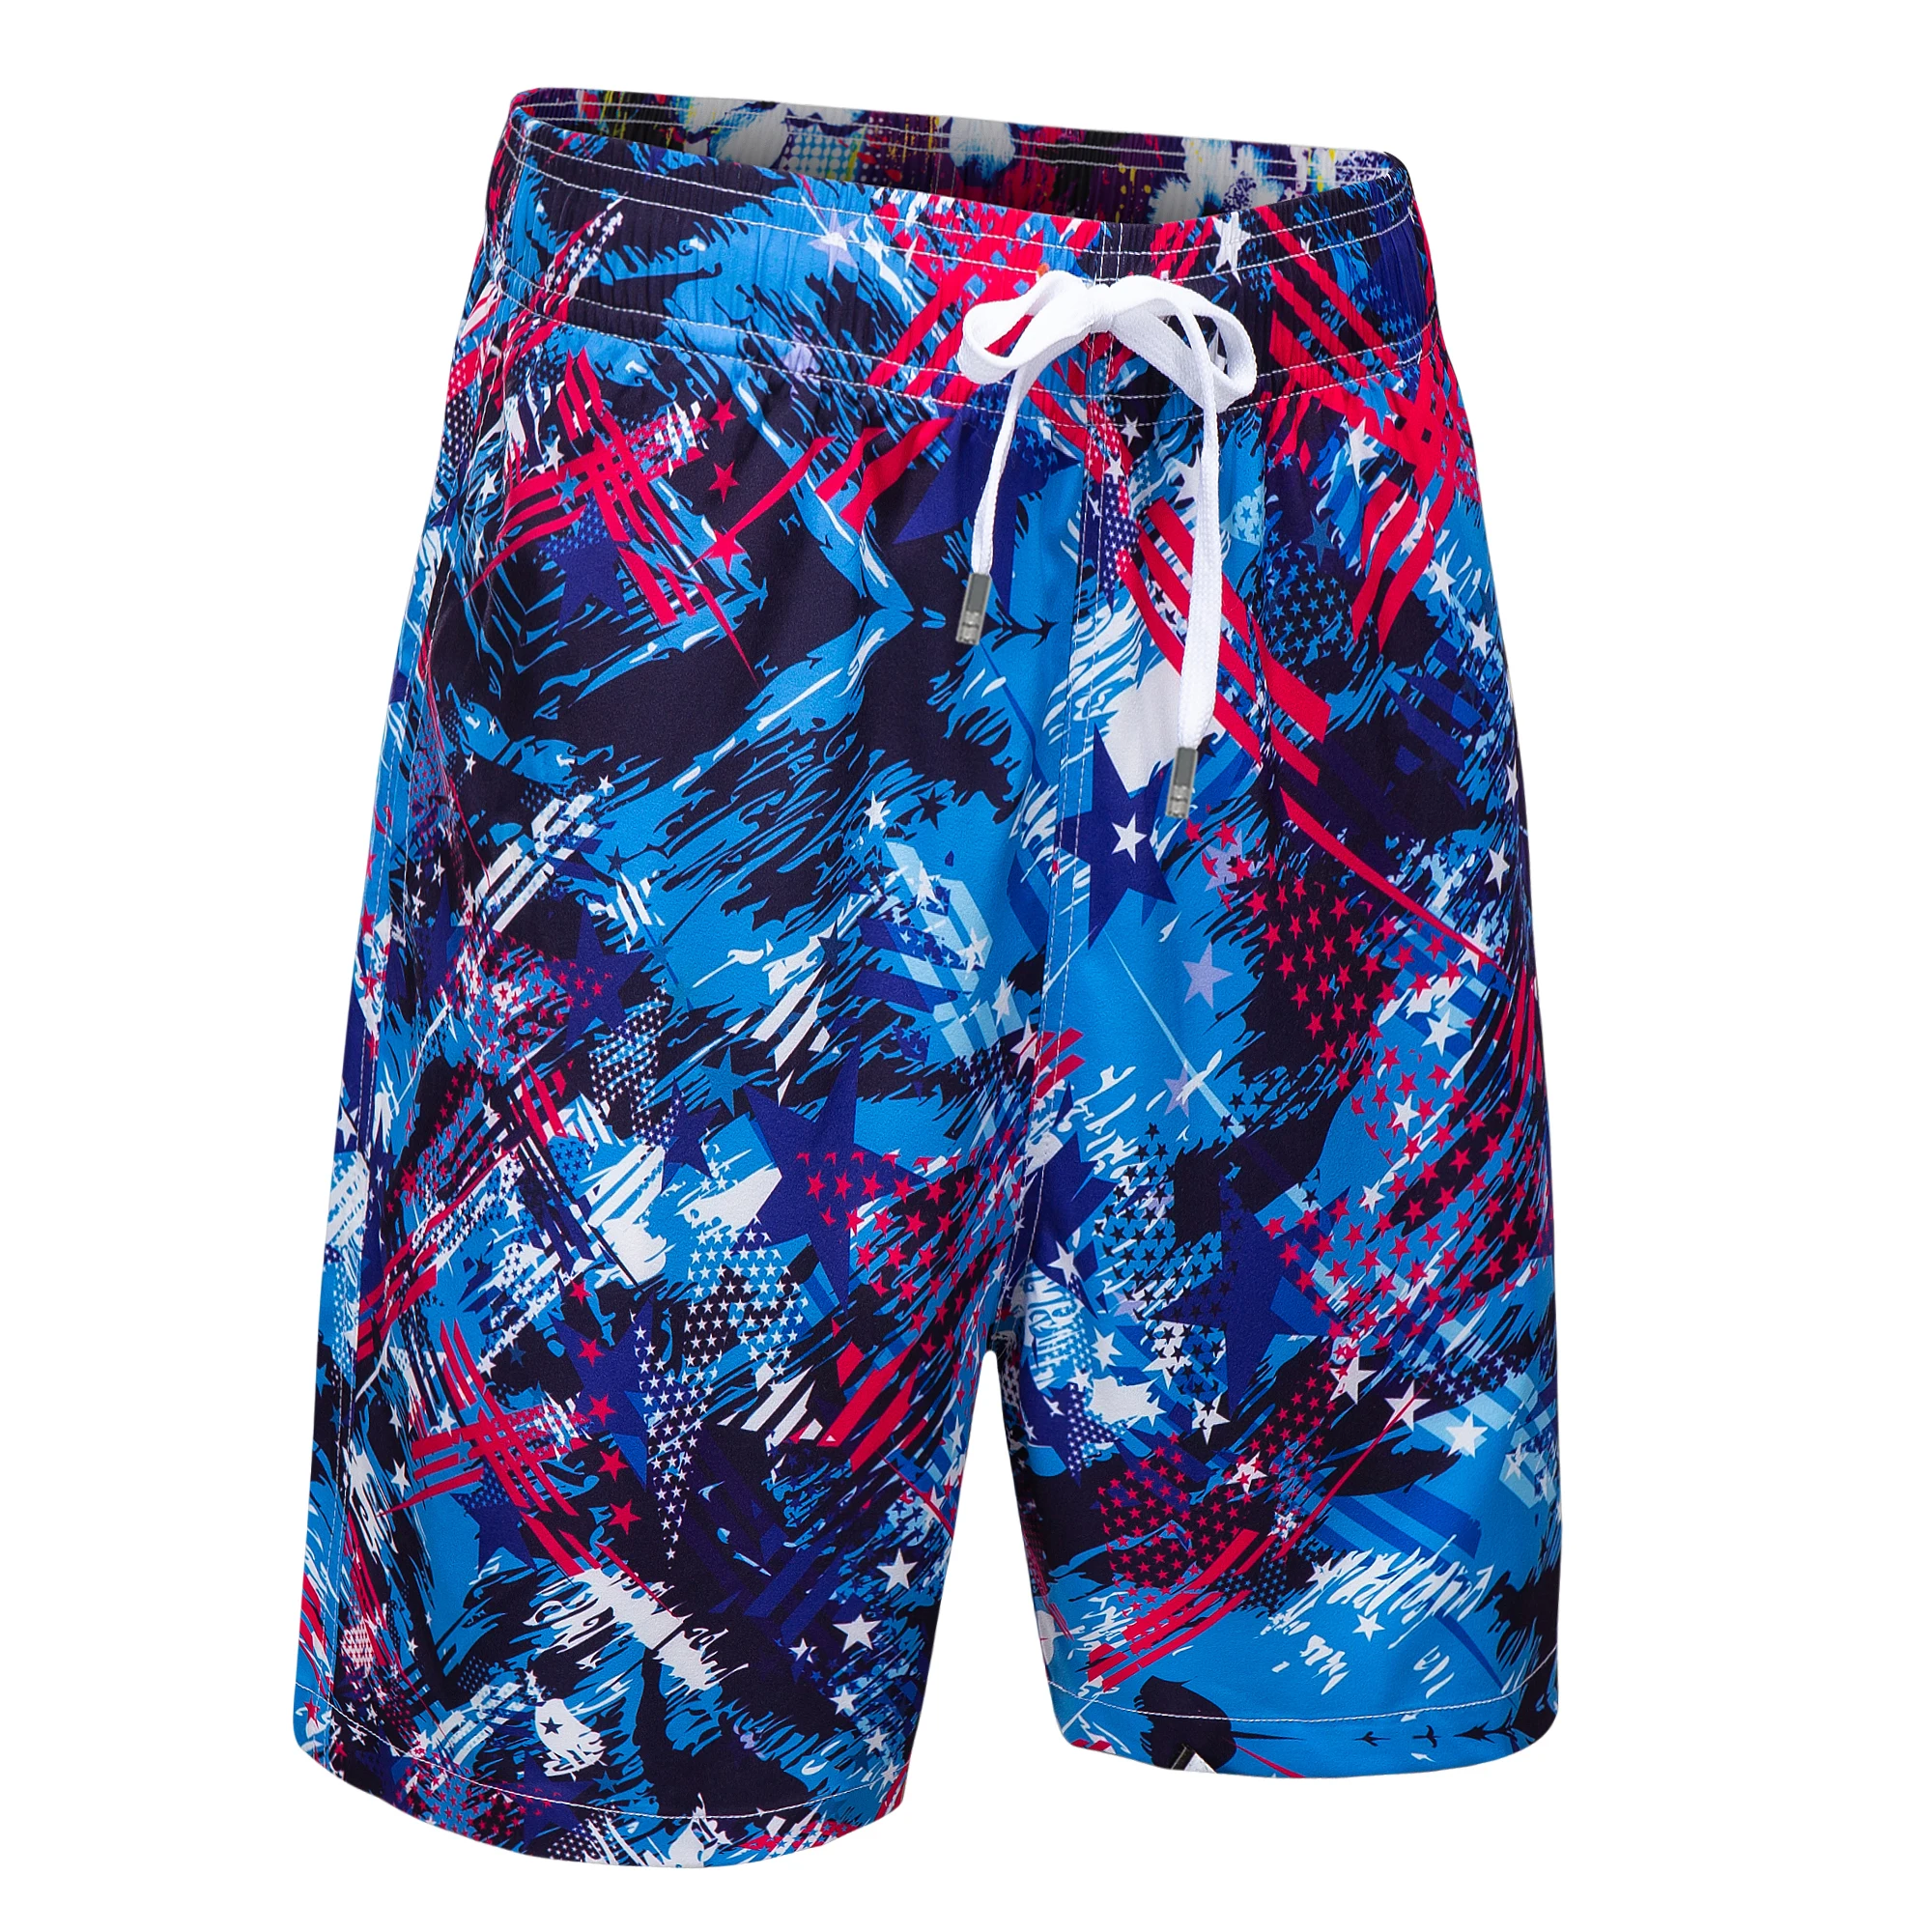 KGKE Men's Swim Trunks Big Size Quick Dry Fashion Print Swim Trunks and Beach Shorts Surf Shorts